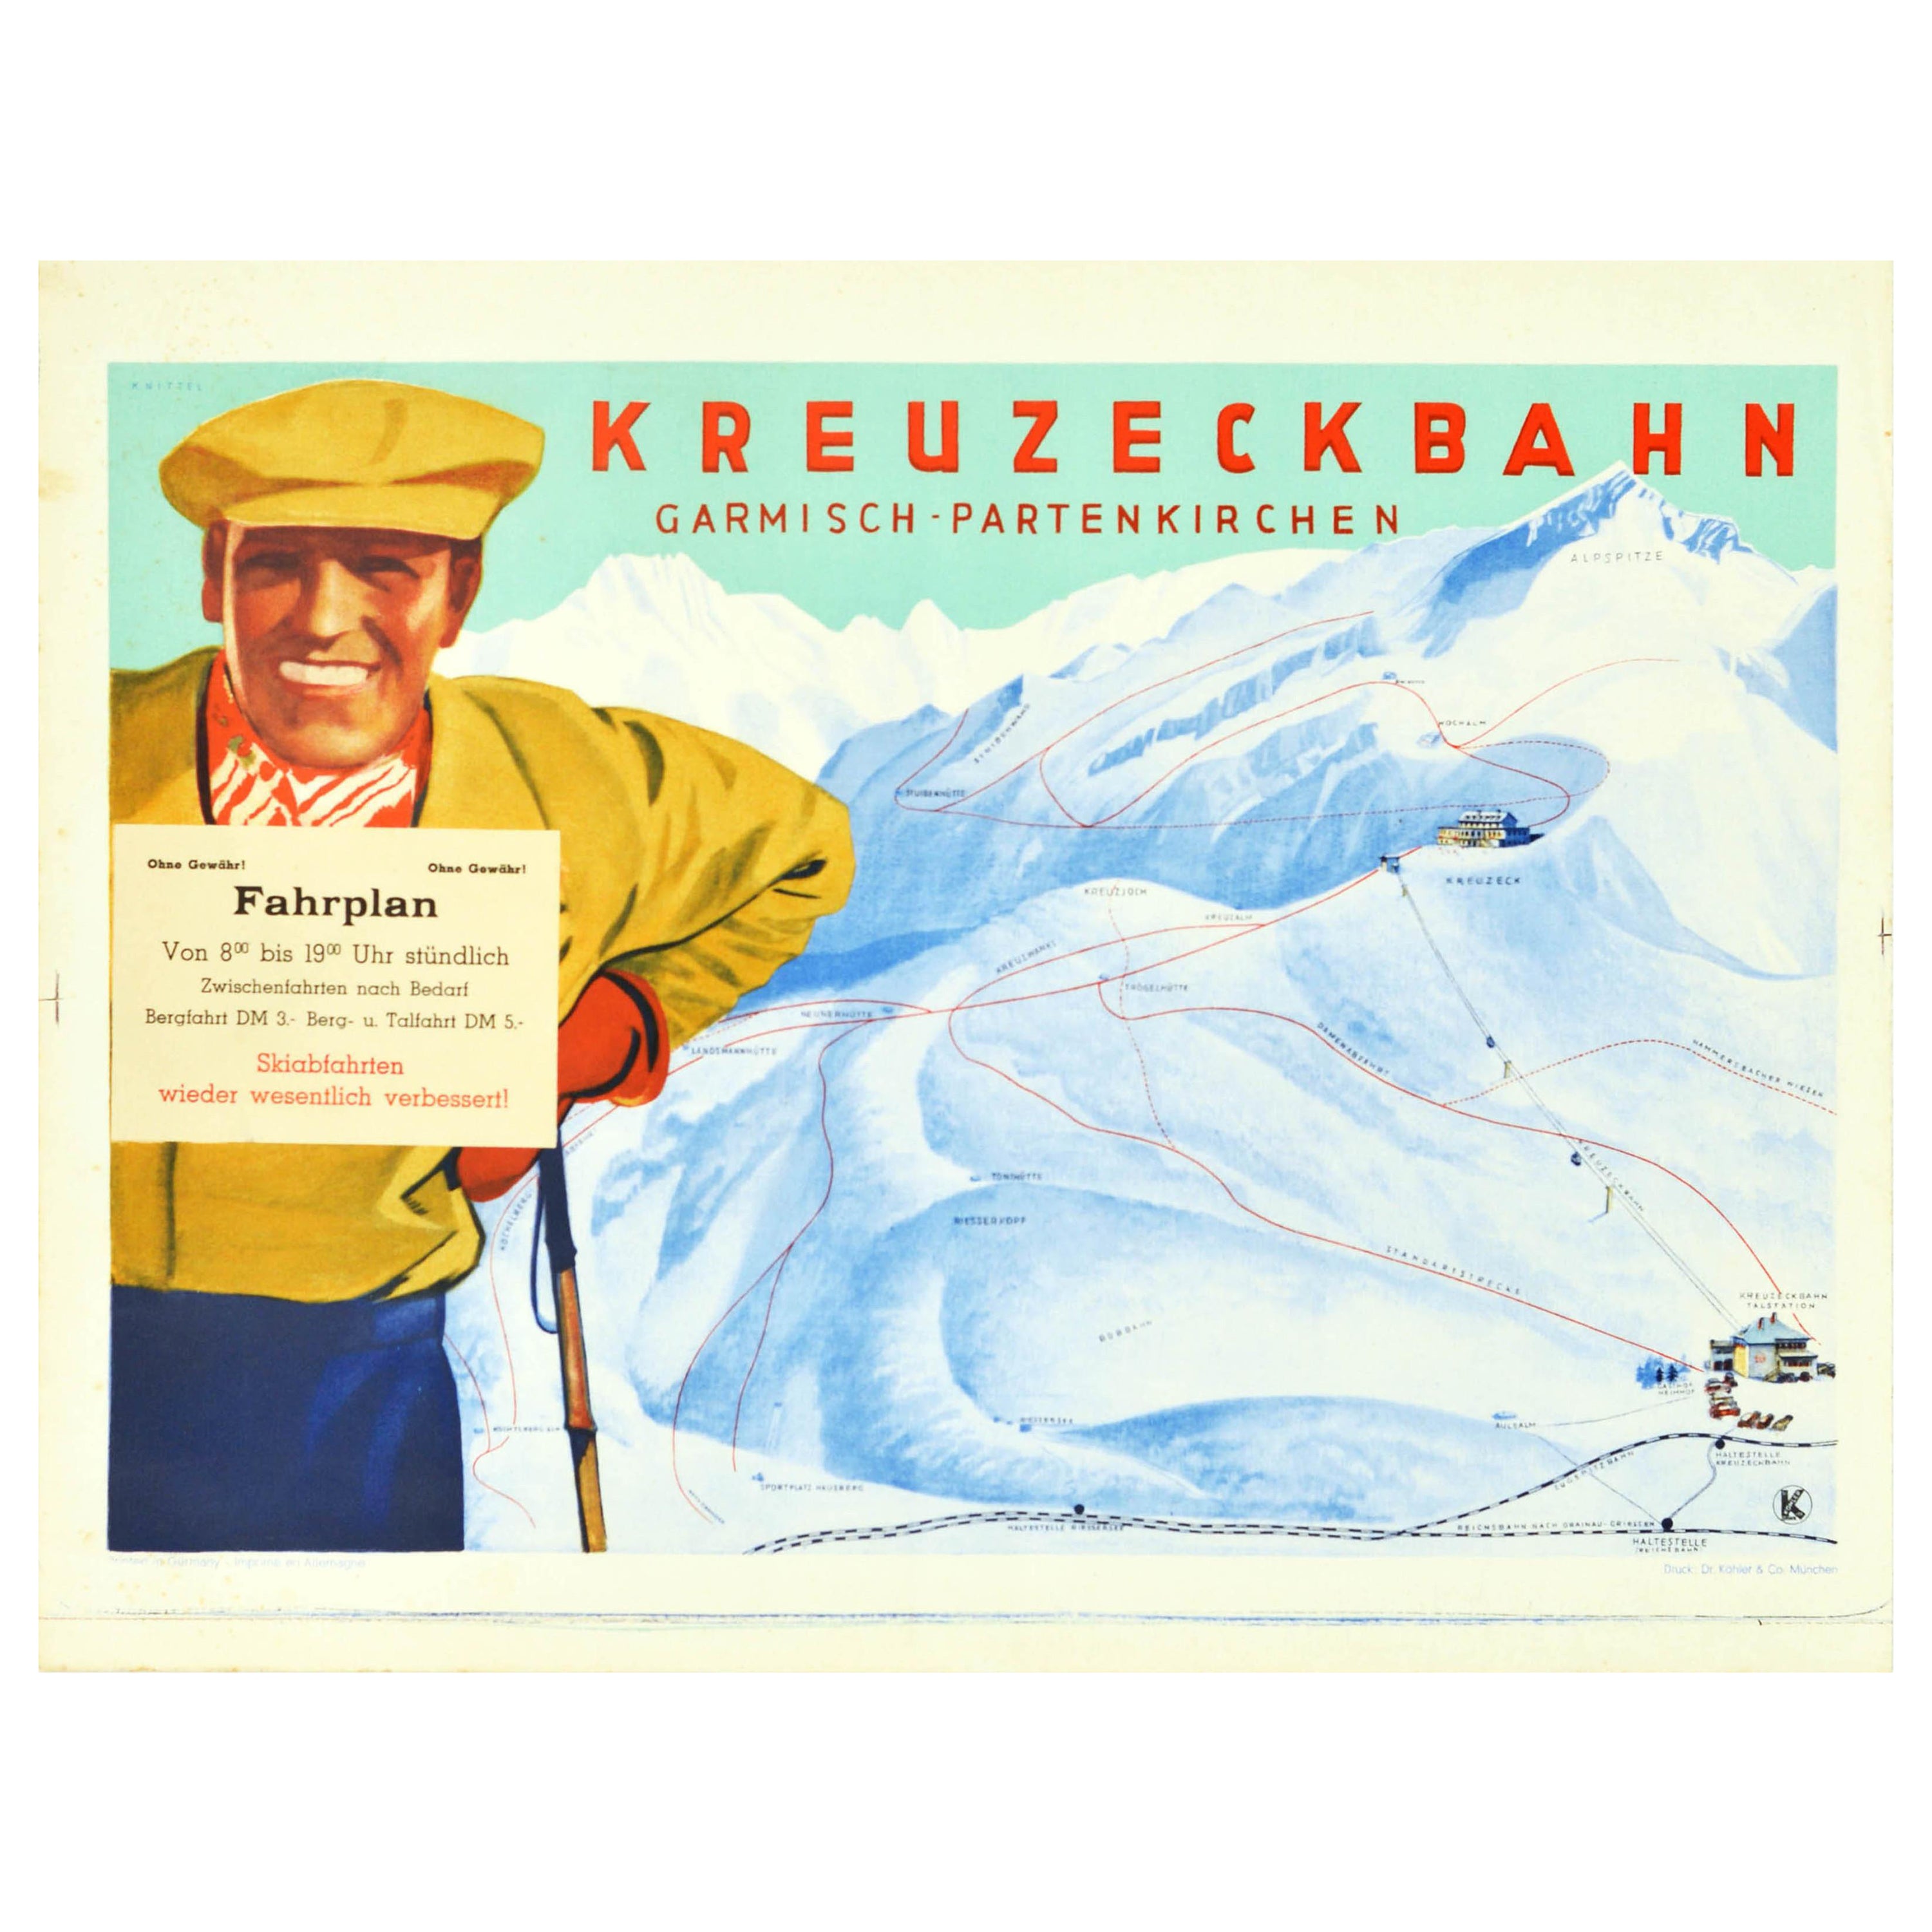 Original Vintage Poster Kreuzeck Bahn Garmisch Partenkirchen Skiing Cable Car For Sale